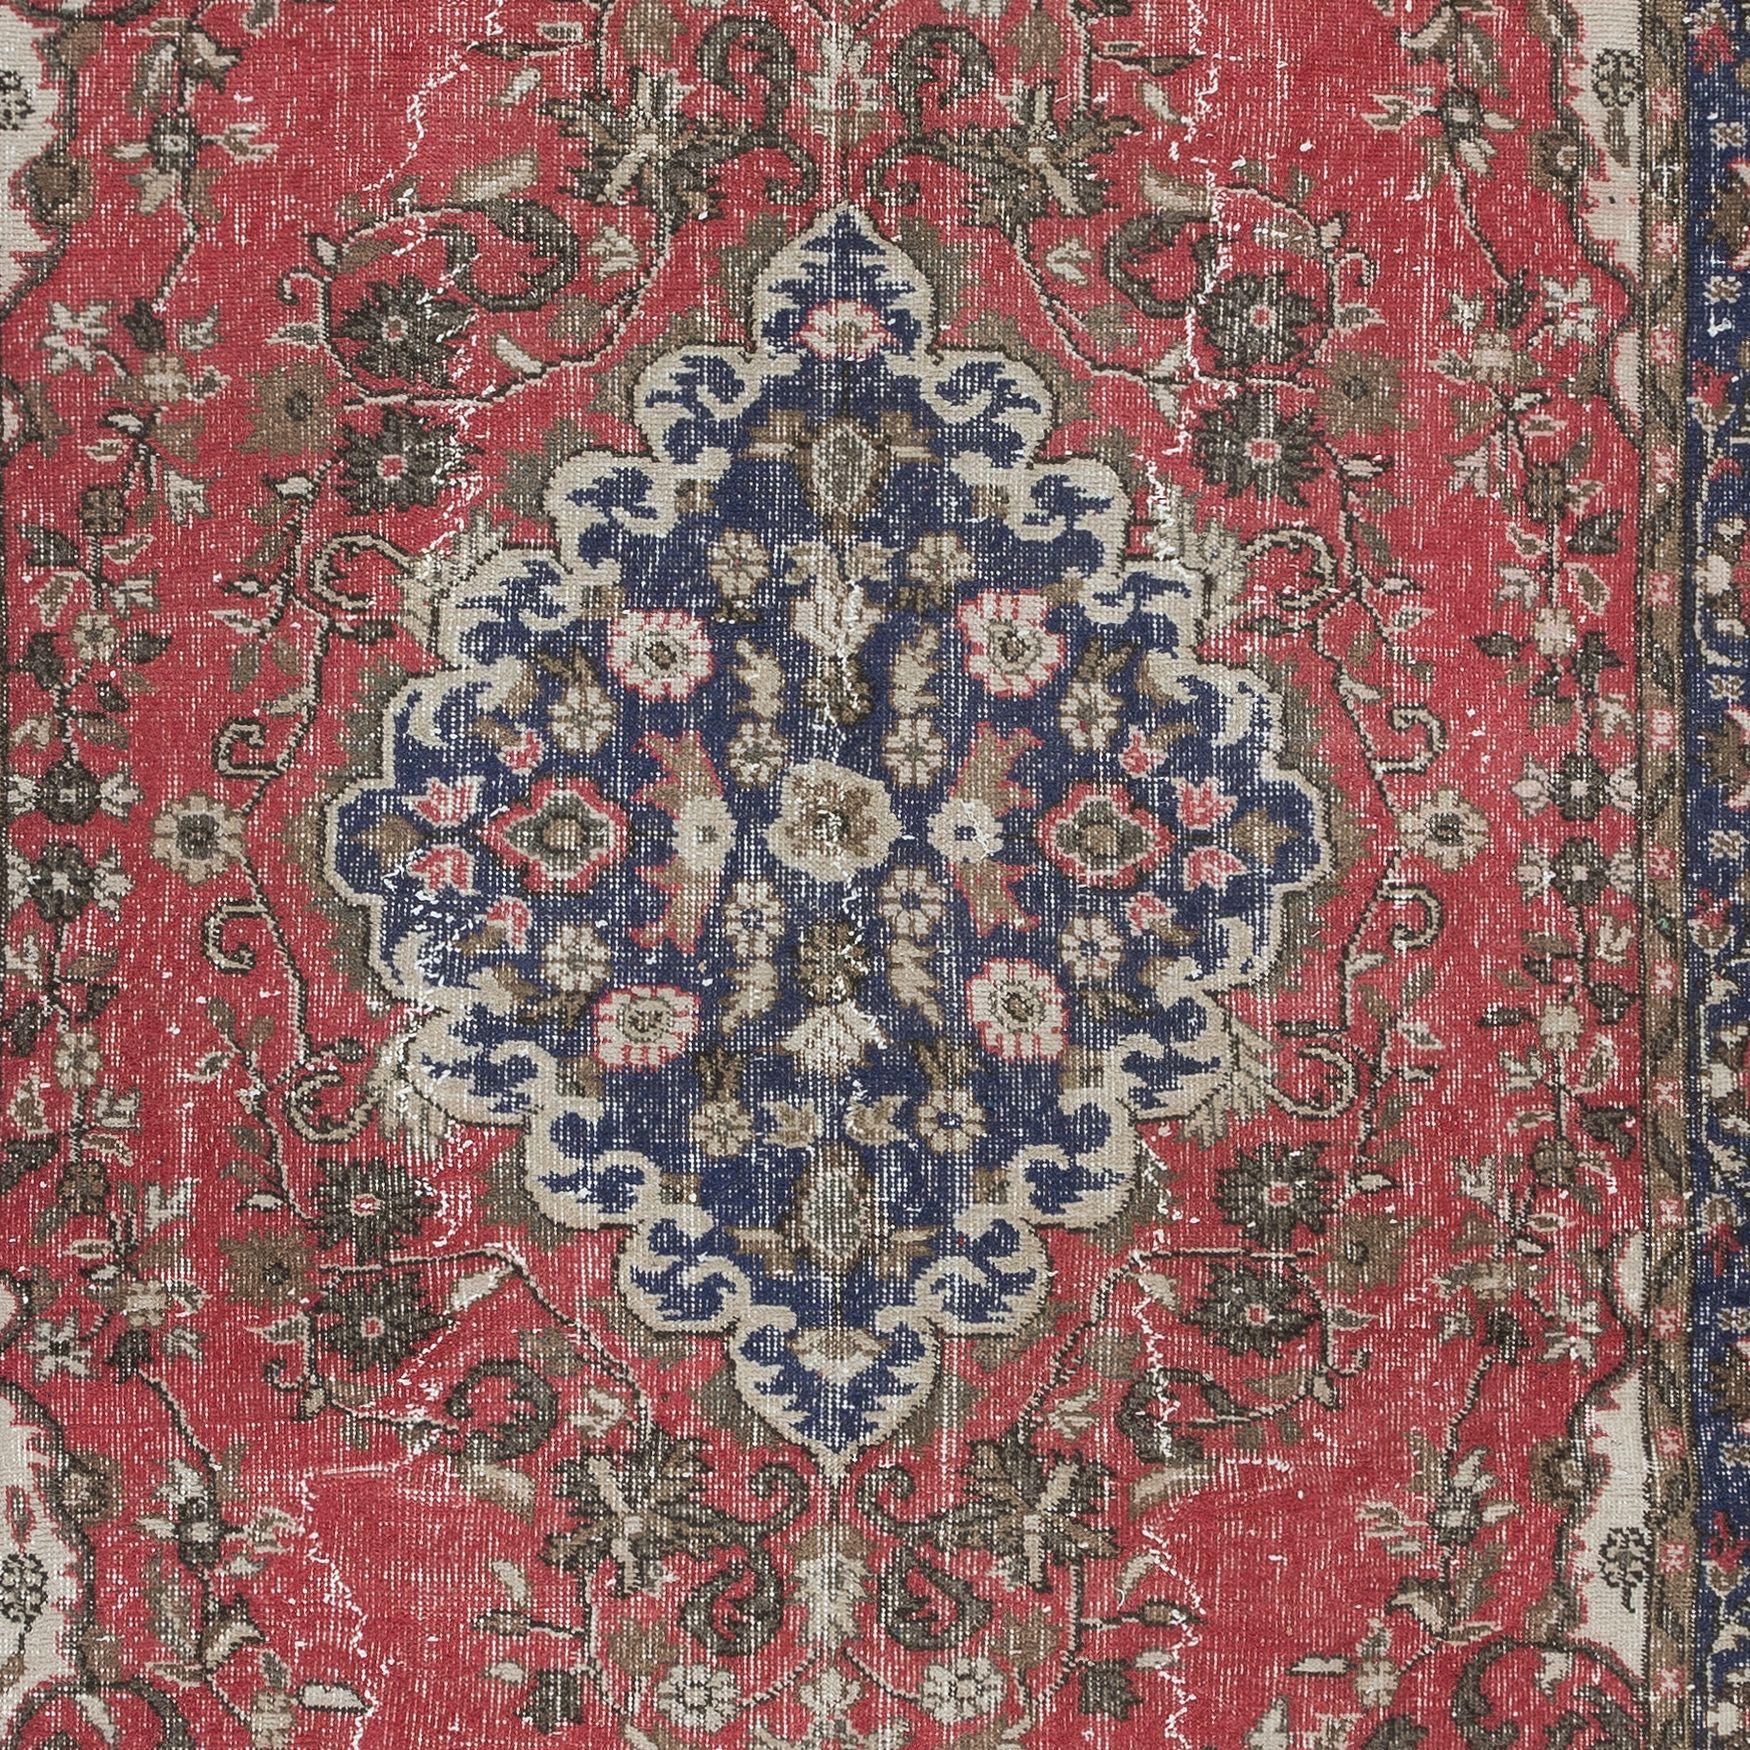 5.6x10.2 Ft Vintage Handmade Turkish Wool Area Rug in Red, Beige & Dark Blue In Good Condition For Sale In Philadelphia, PA